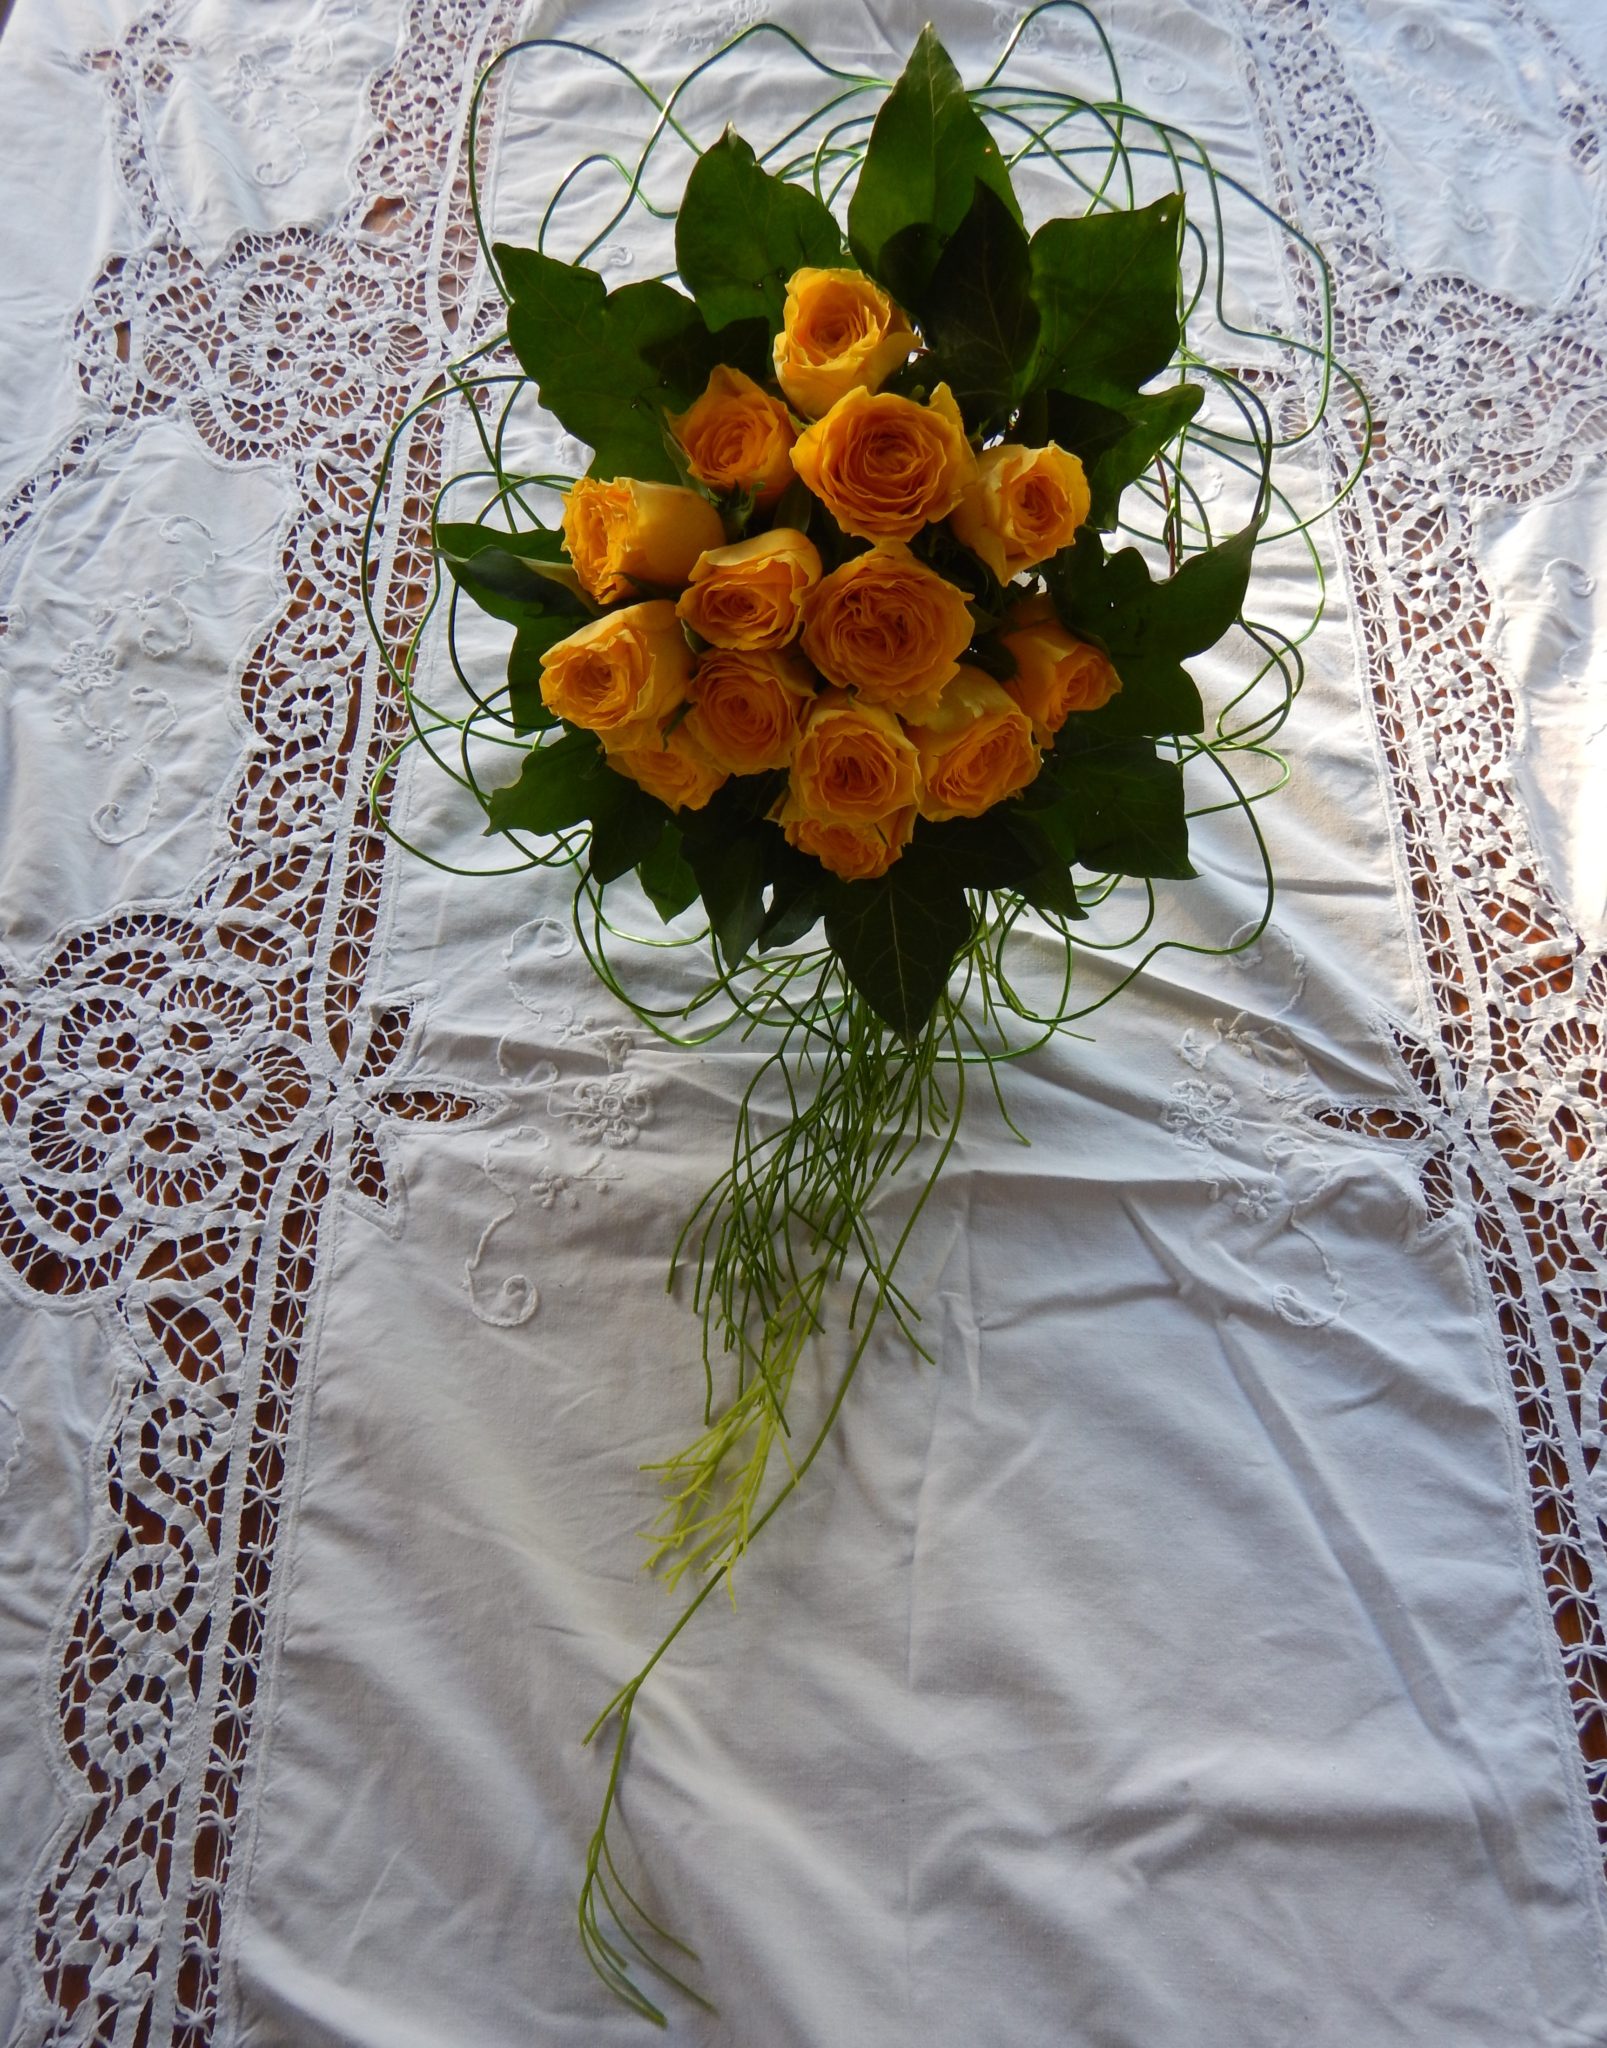 Diana Holman - Bere Regis Floral Group